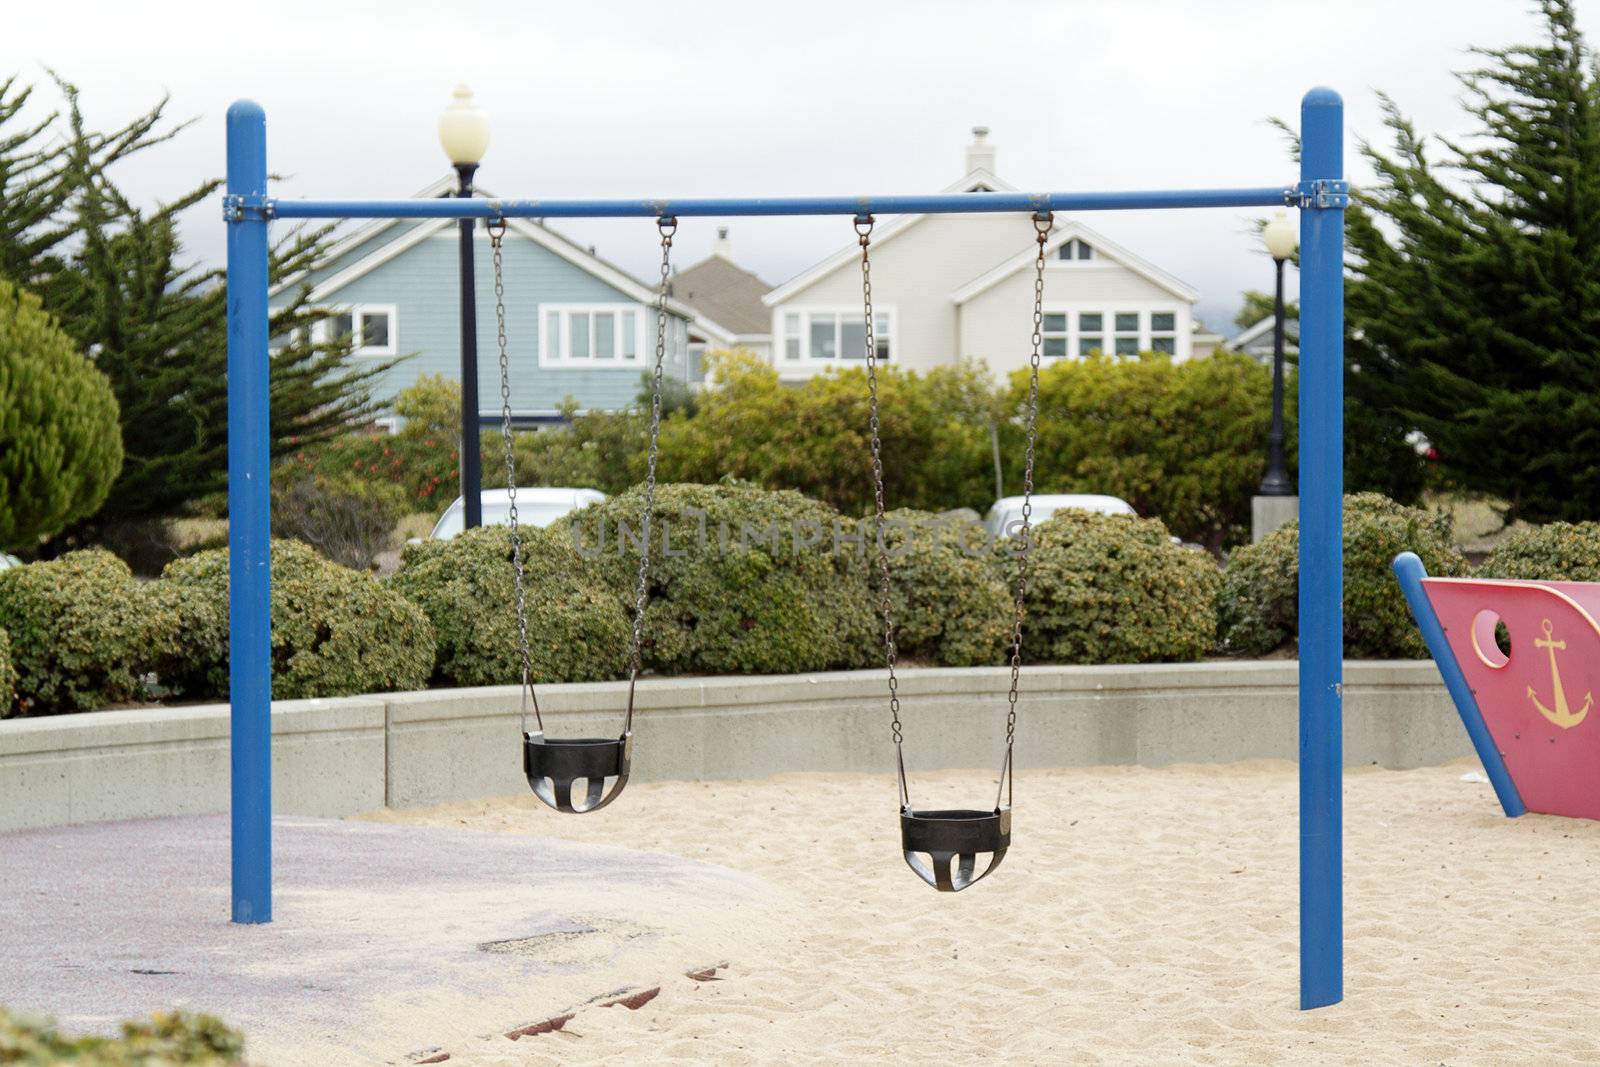 Swing on the children's playground by pulen